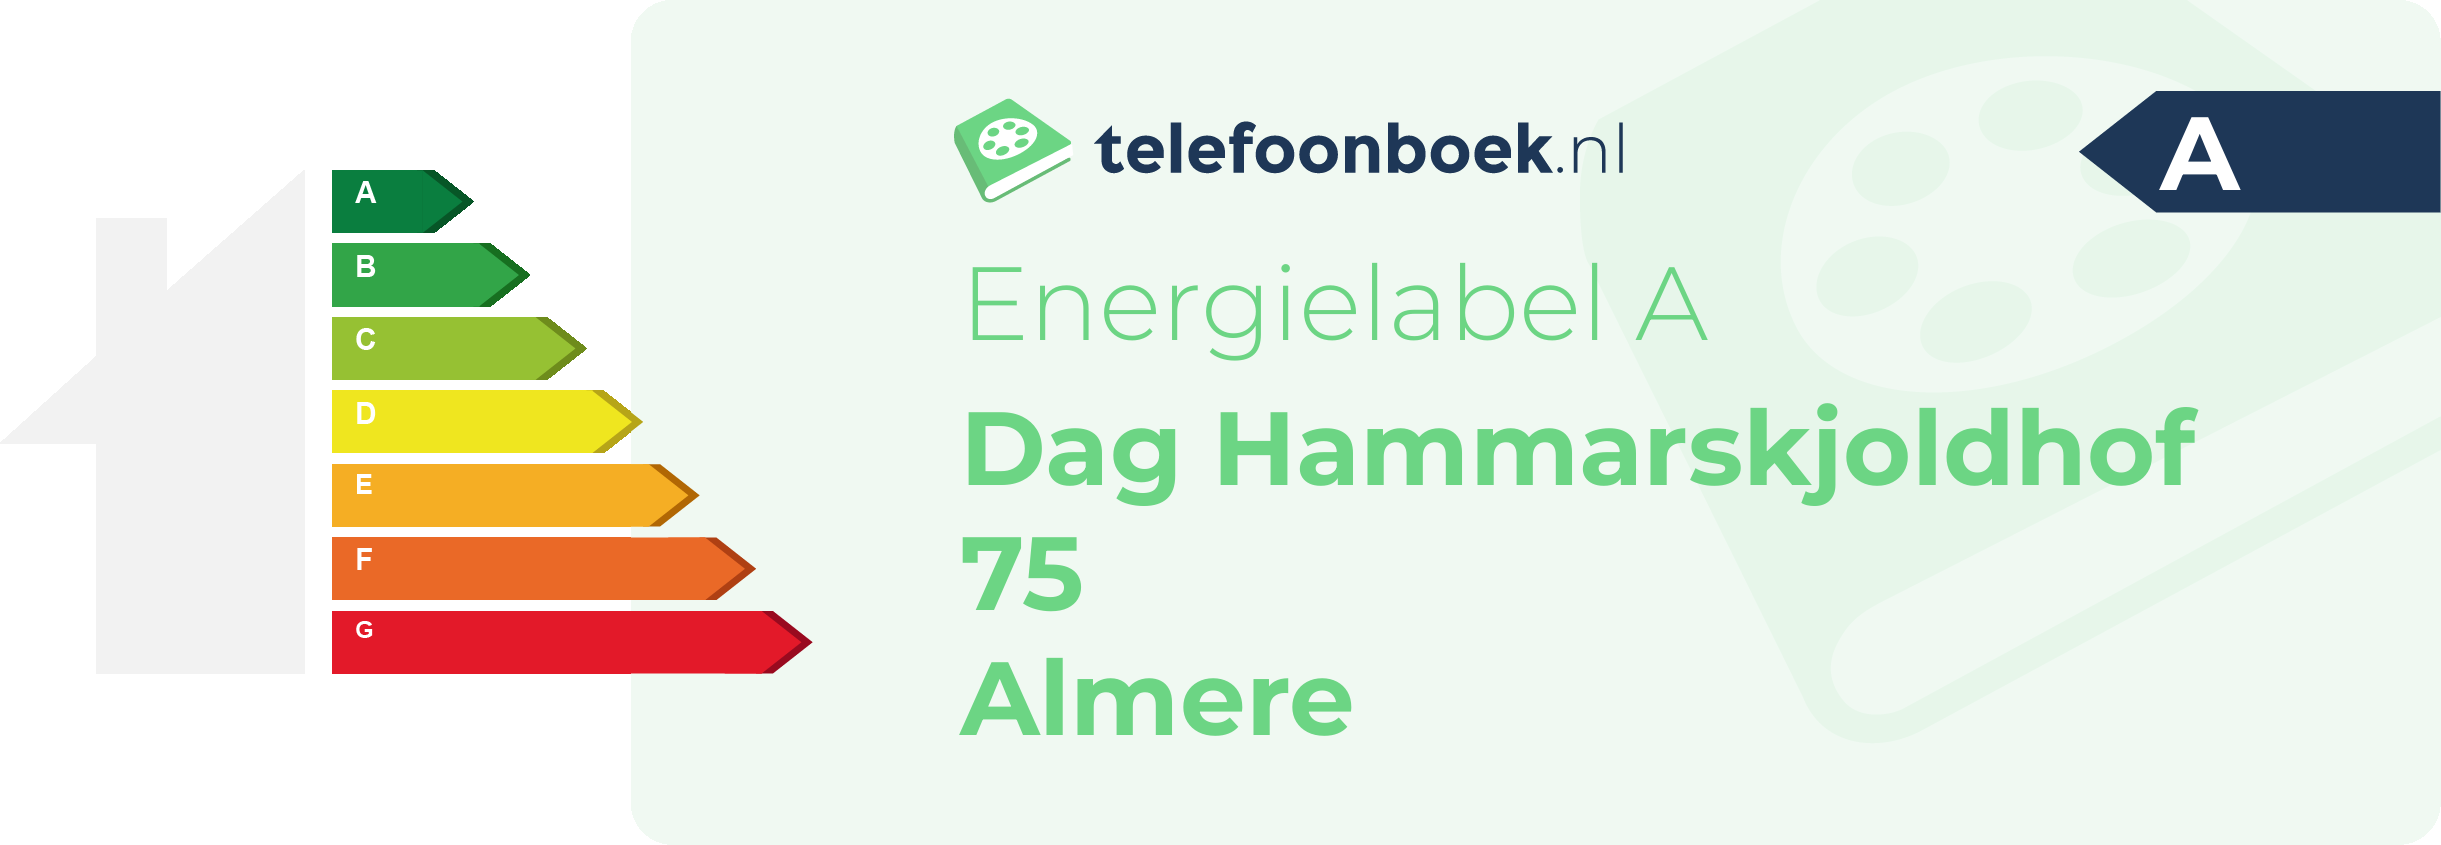 Energielabel Dag Hammarskjoldhof 75 Almere